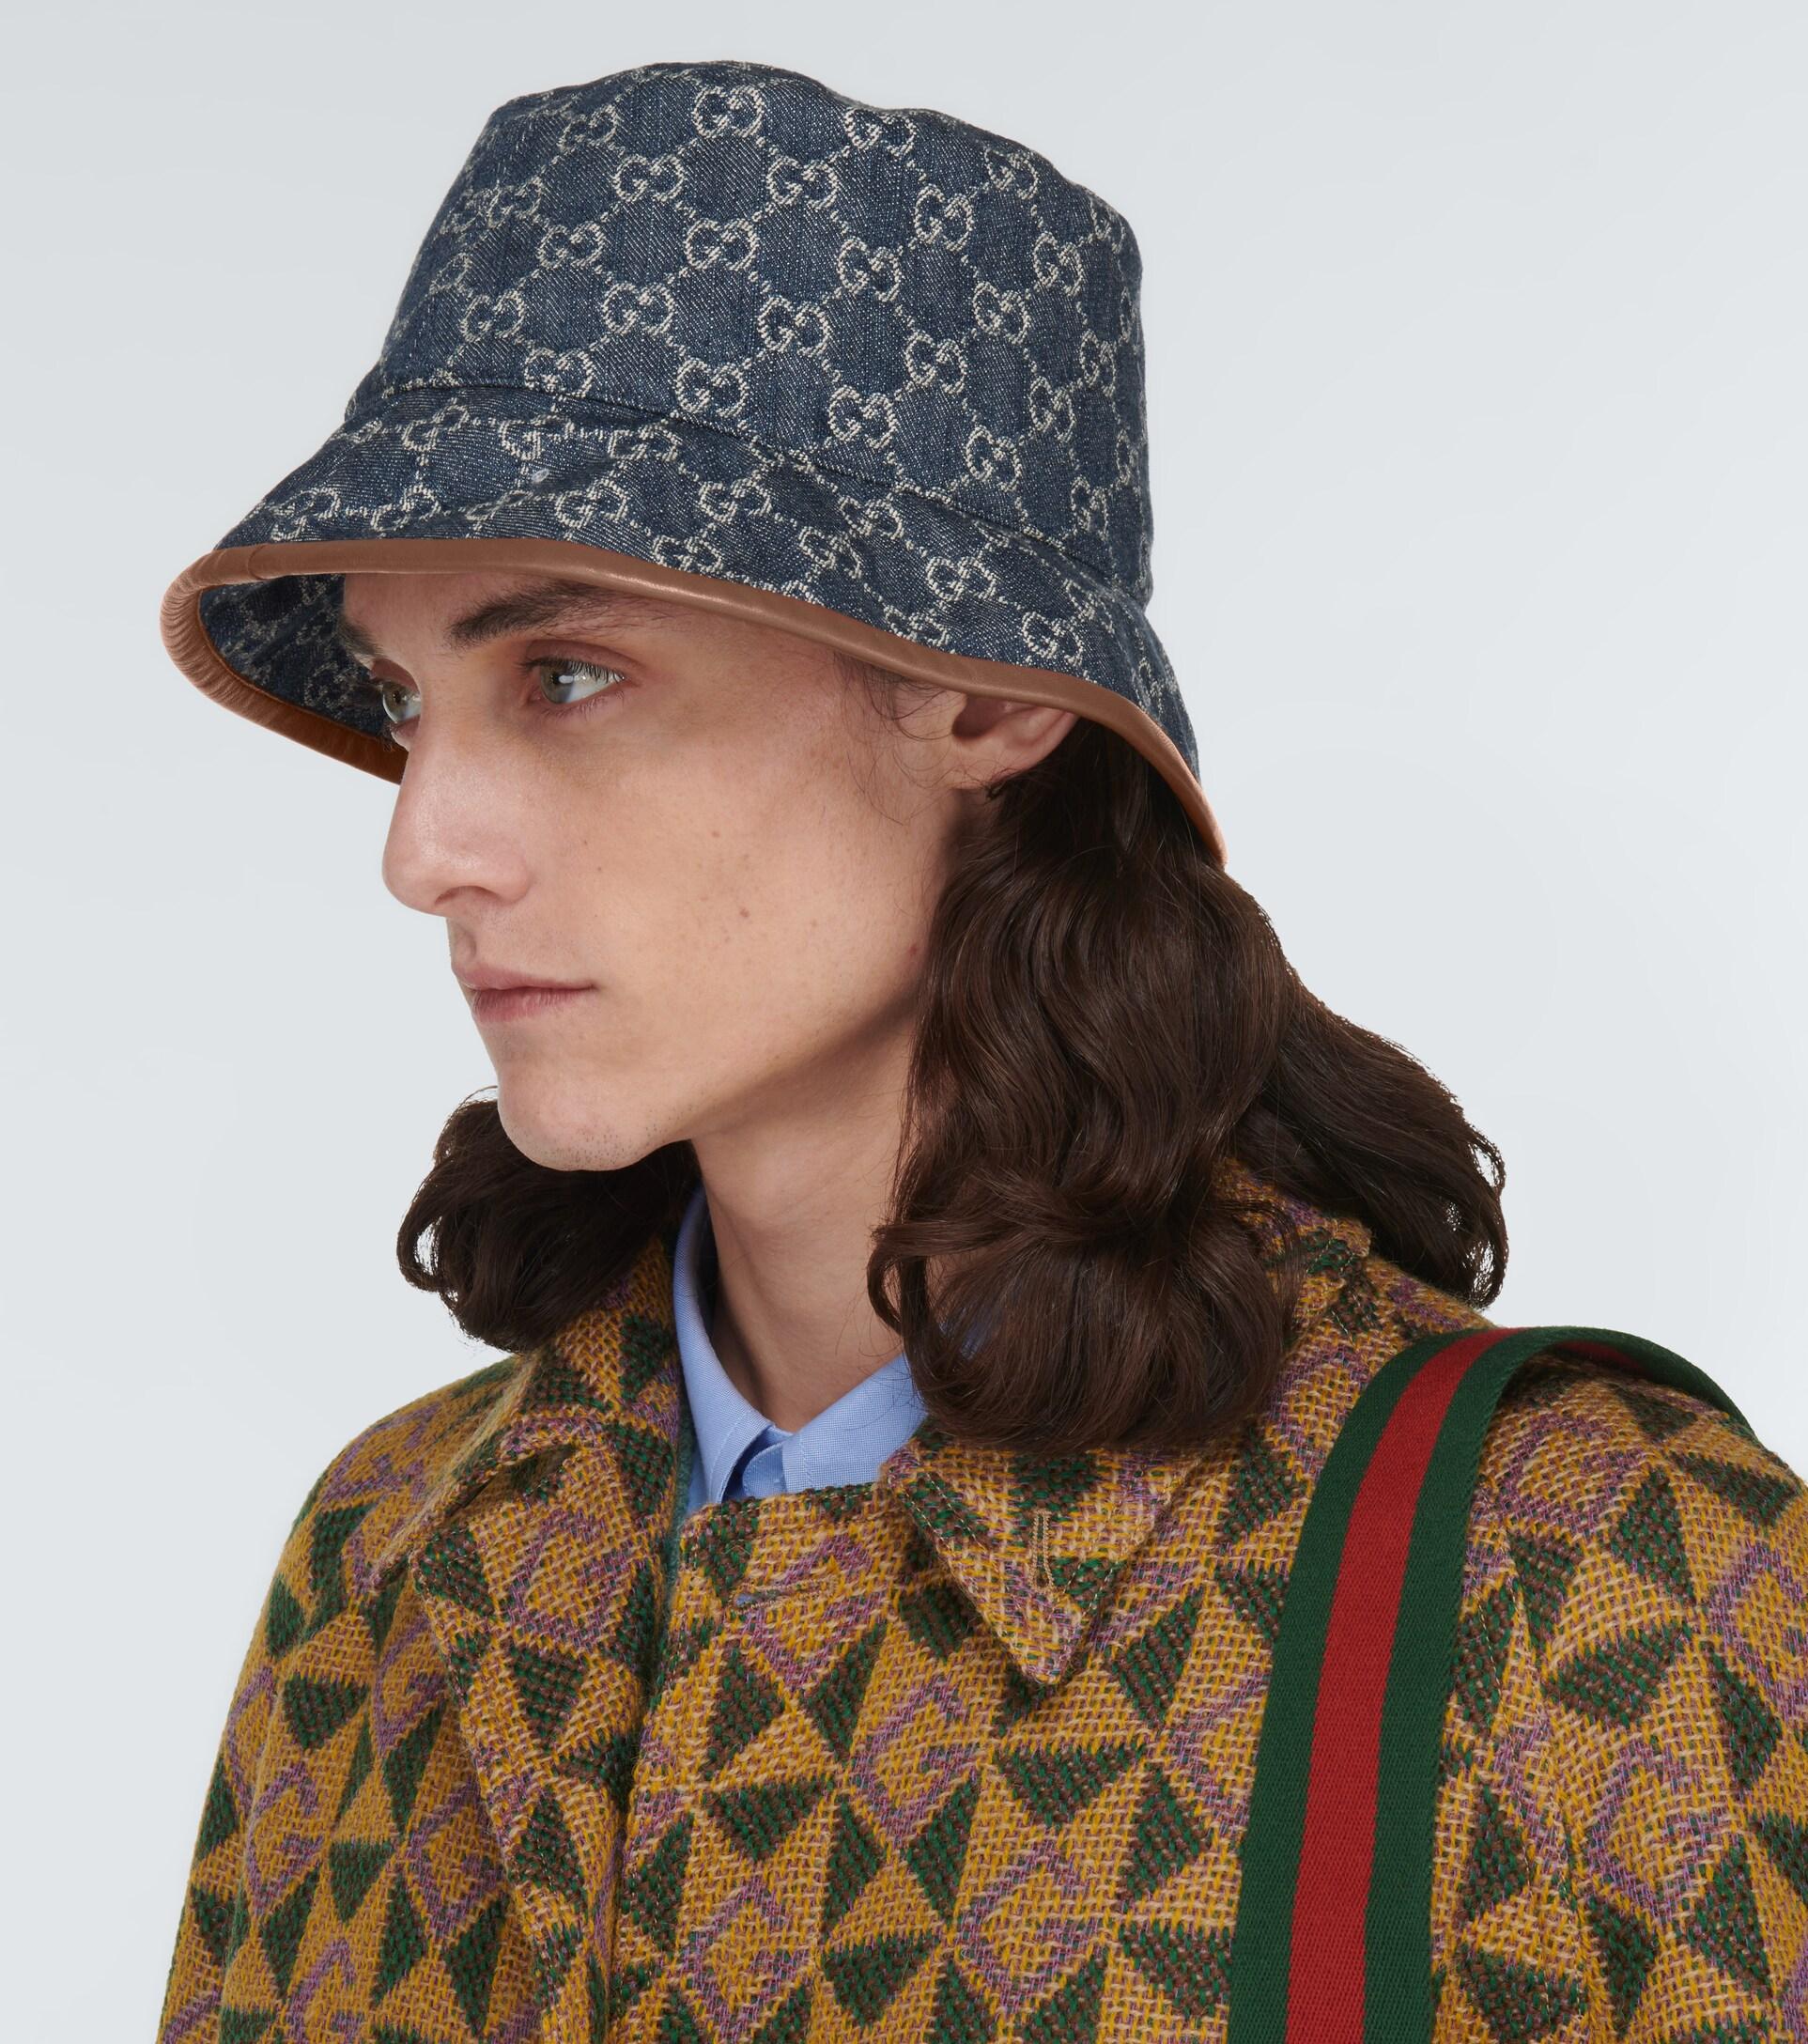 Gucci GG canvas bucket hat  Hats for men, Gucci fashion, Gucci hat